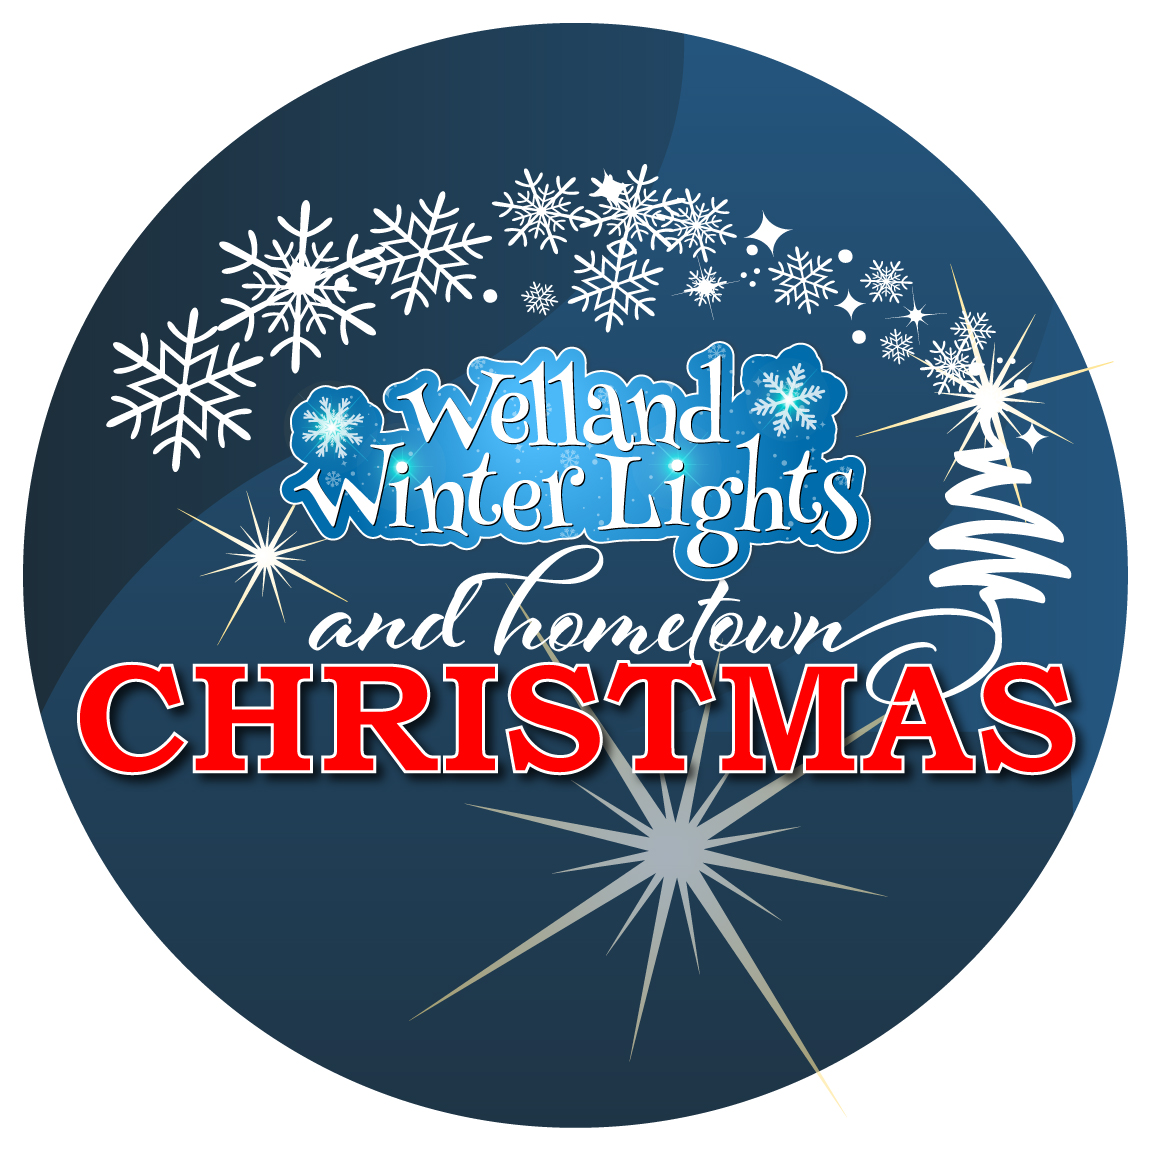 image of hometown Christmas and Welland Winter Lights logos